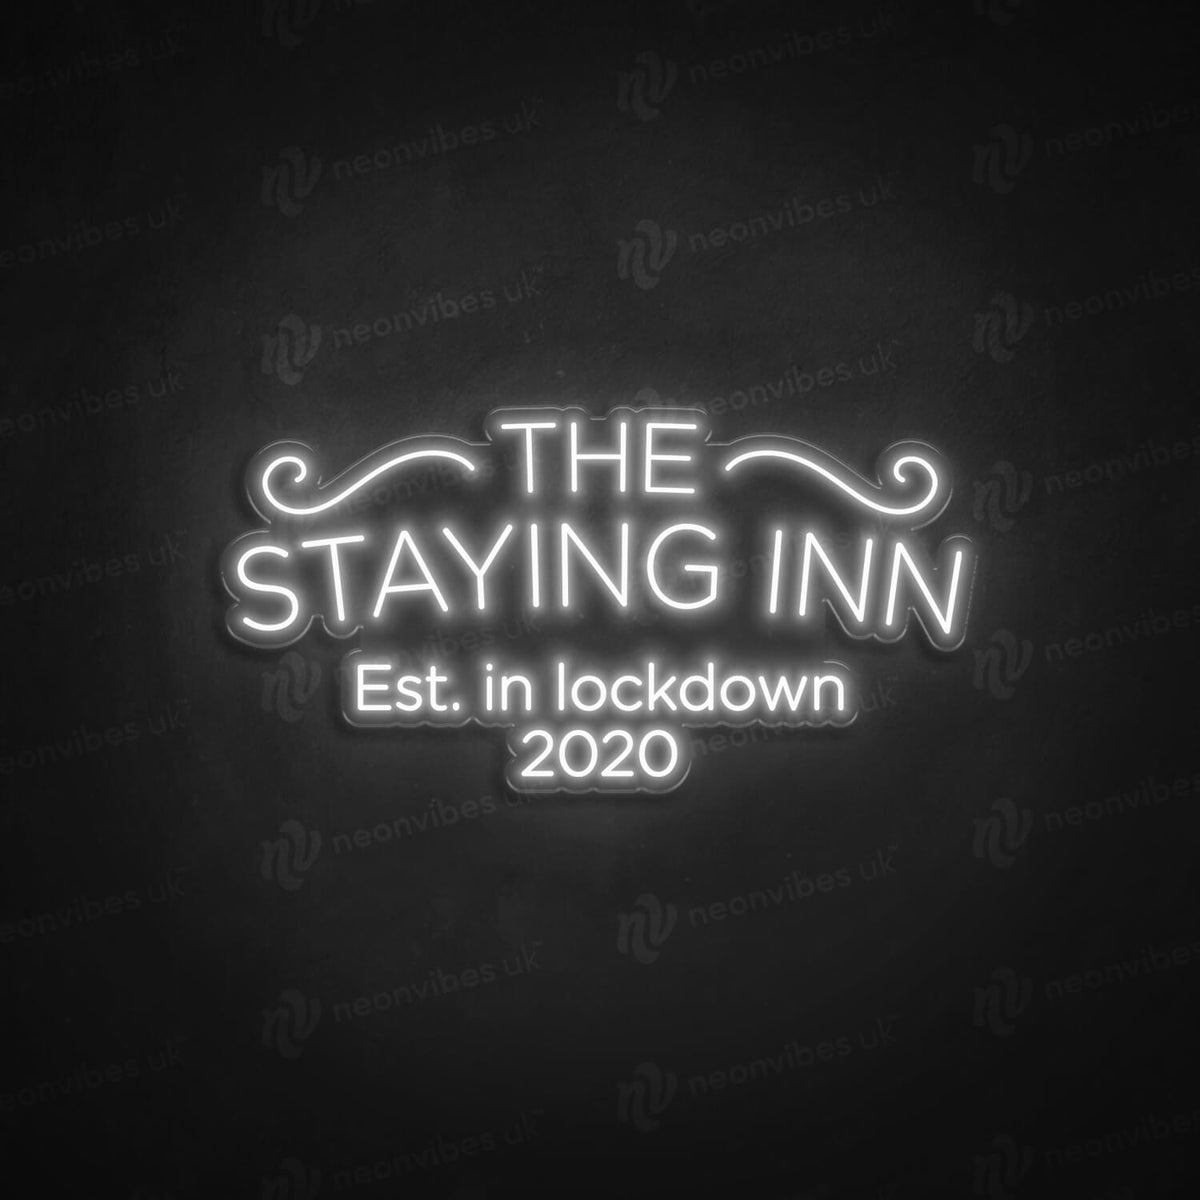 Staying Inn neon sign